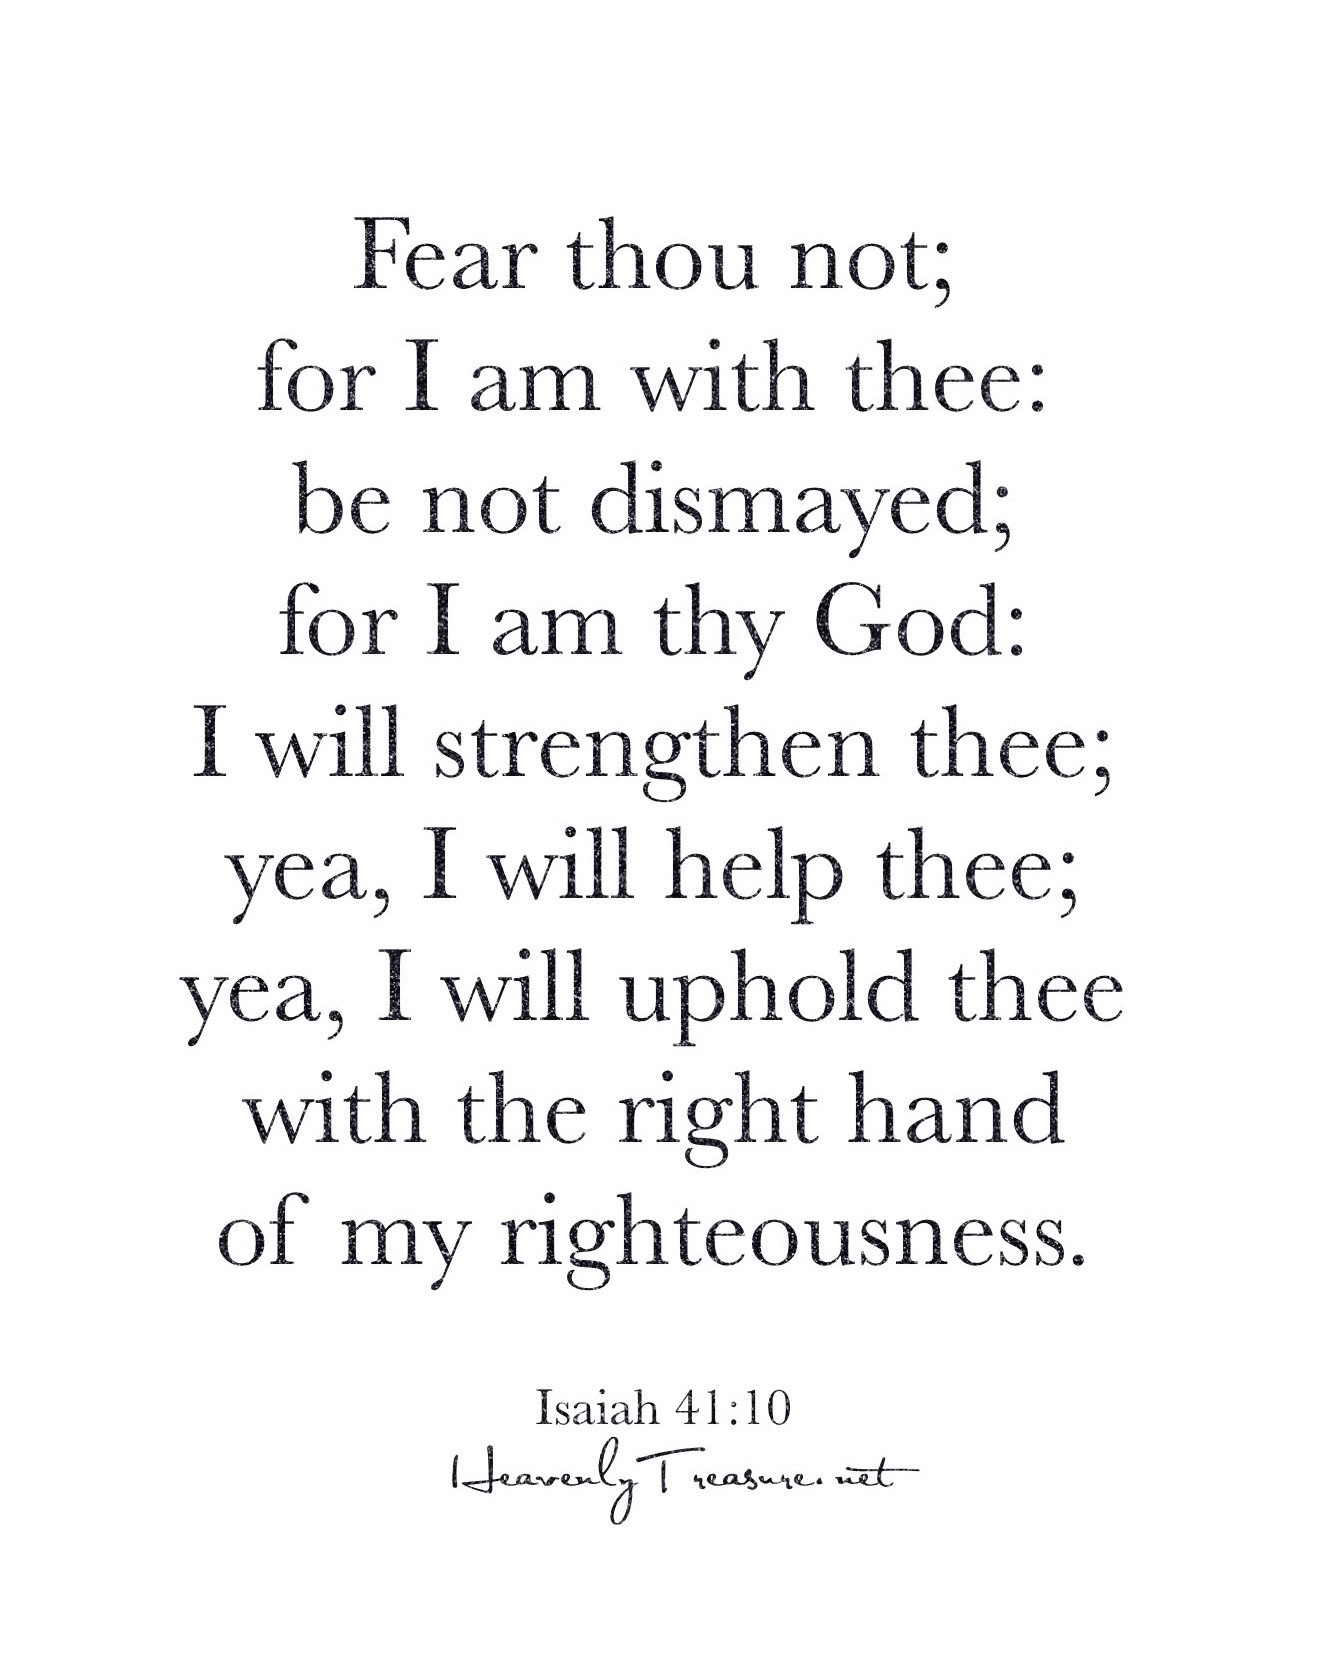 Isaiah 41